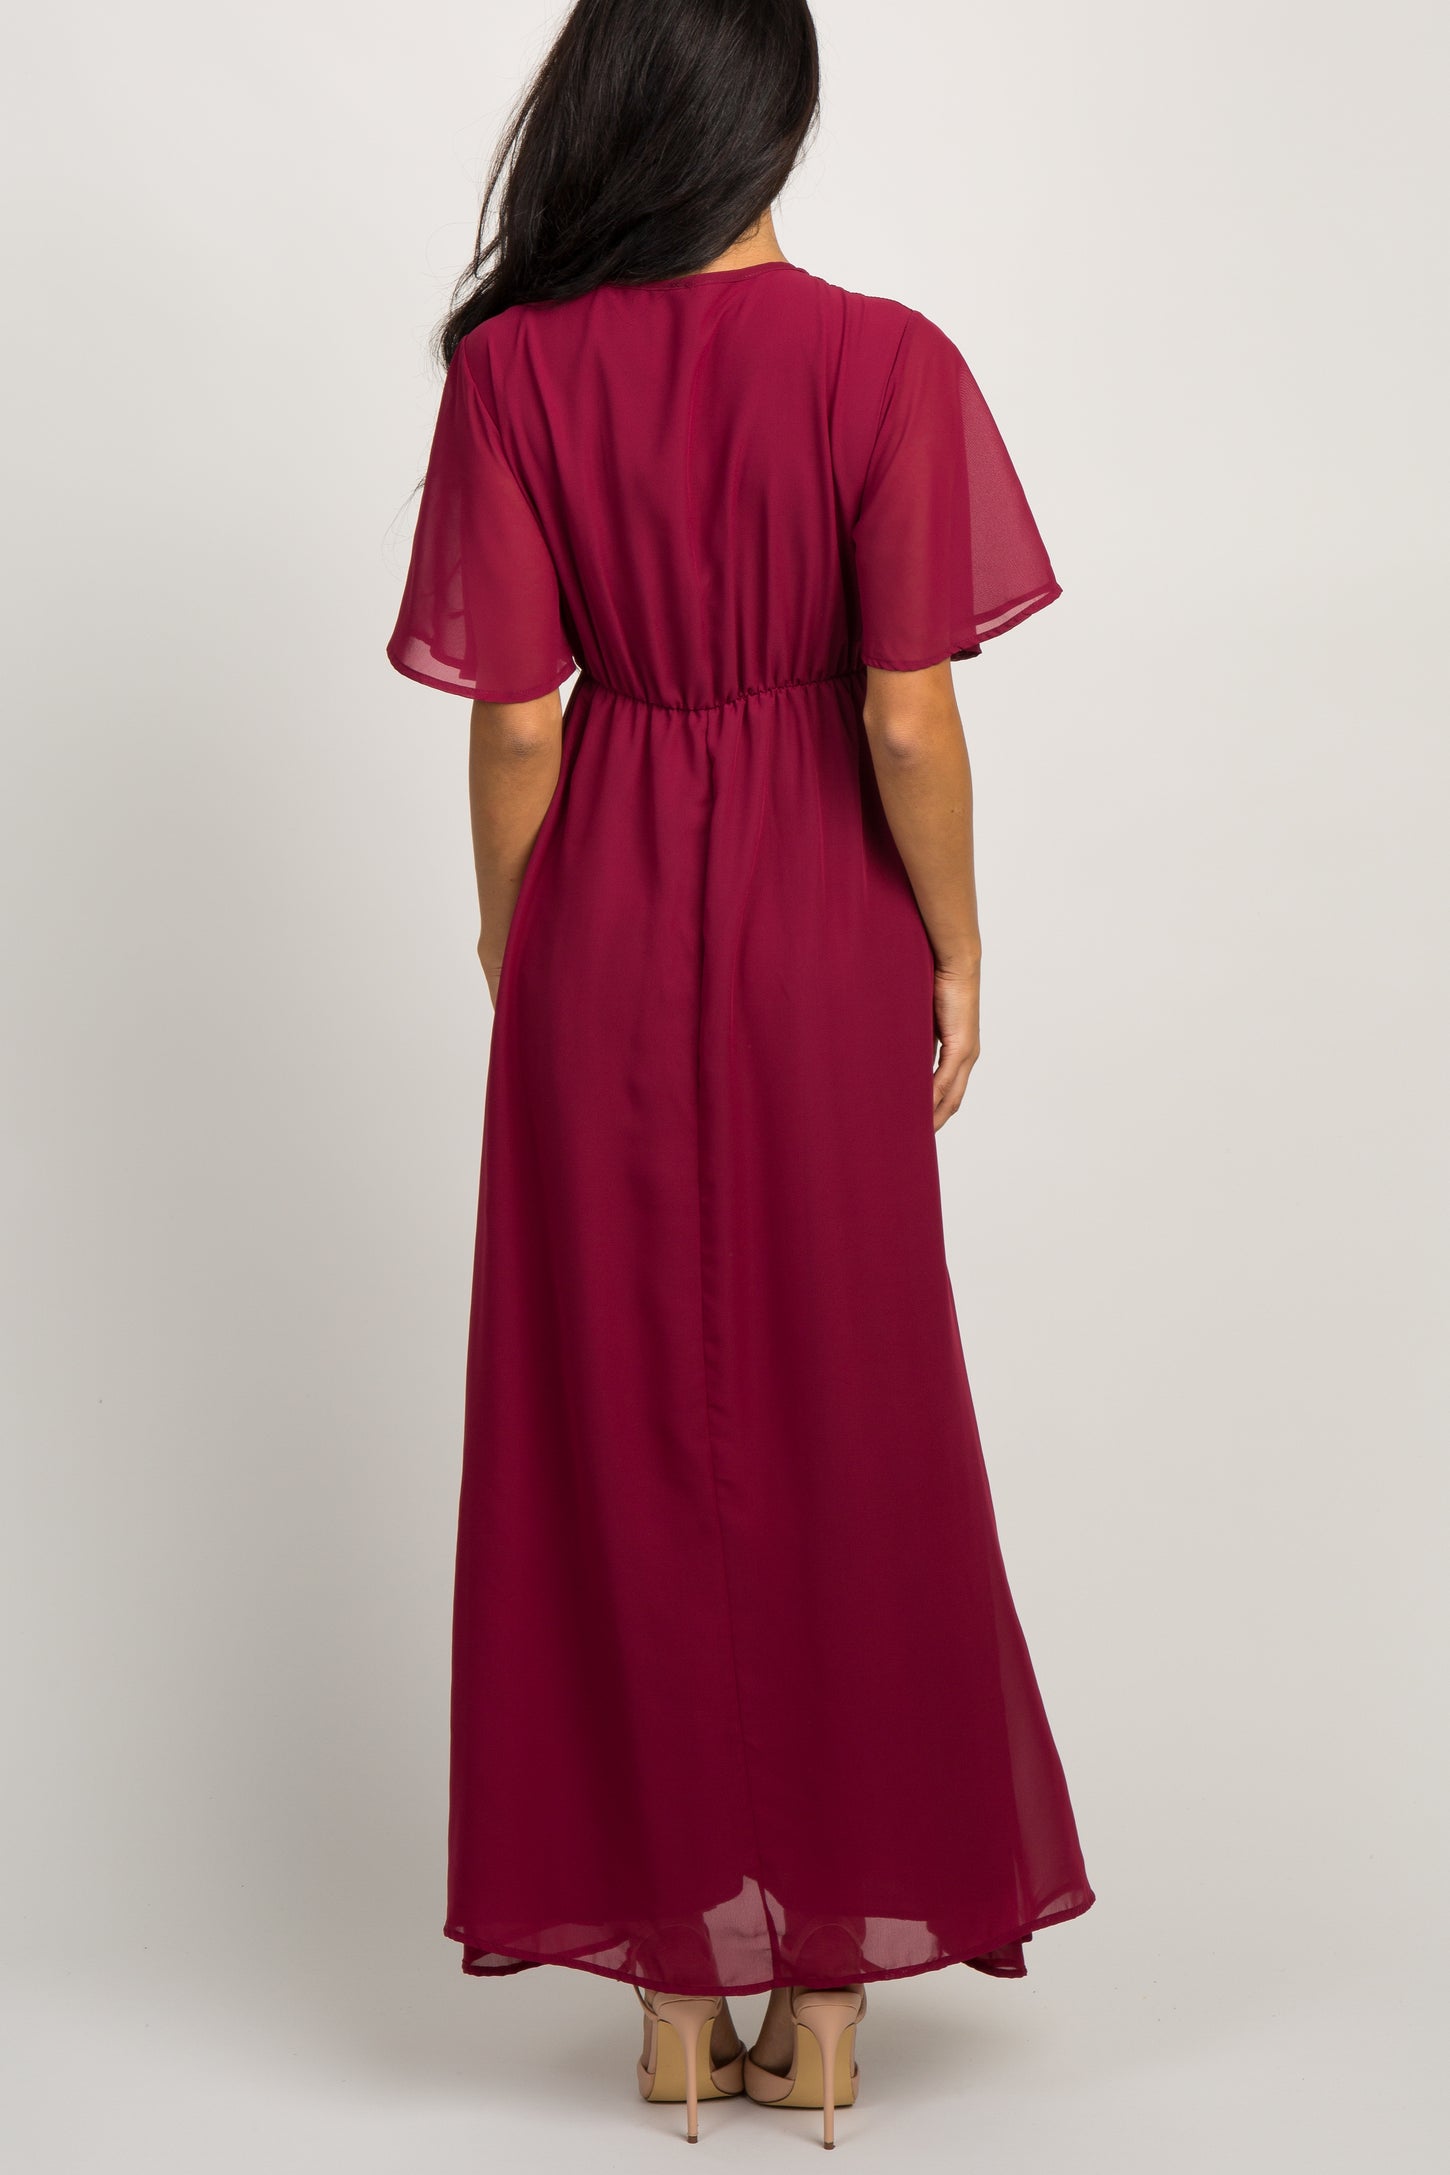 Burgundy Chiffon Bell Sleeve Maxi Dress